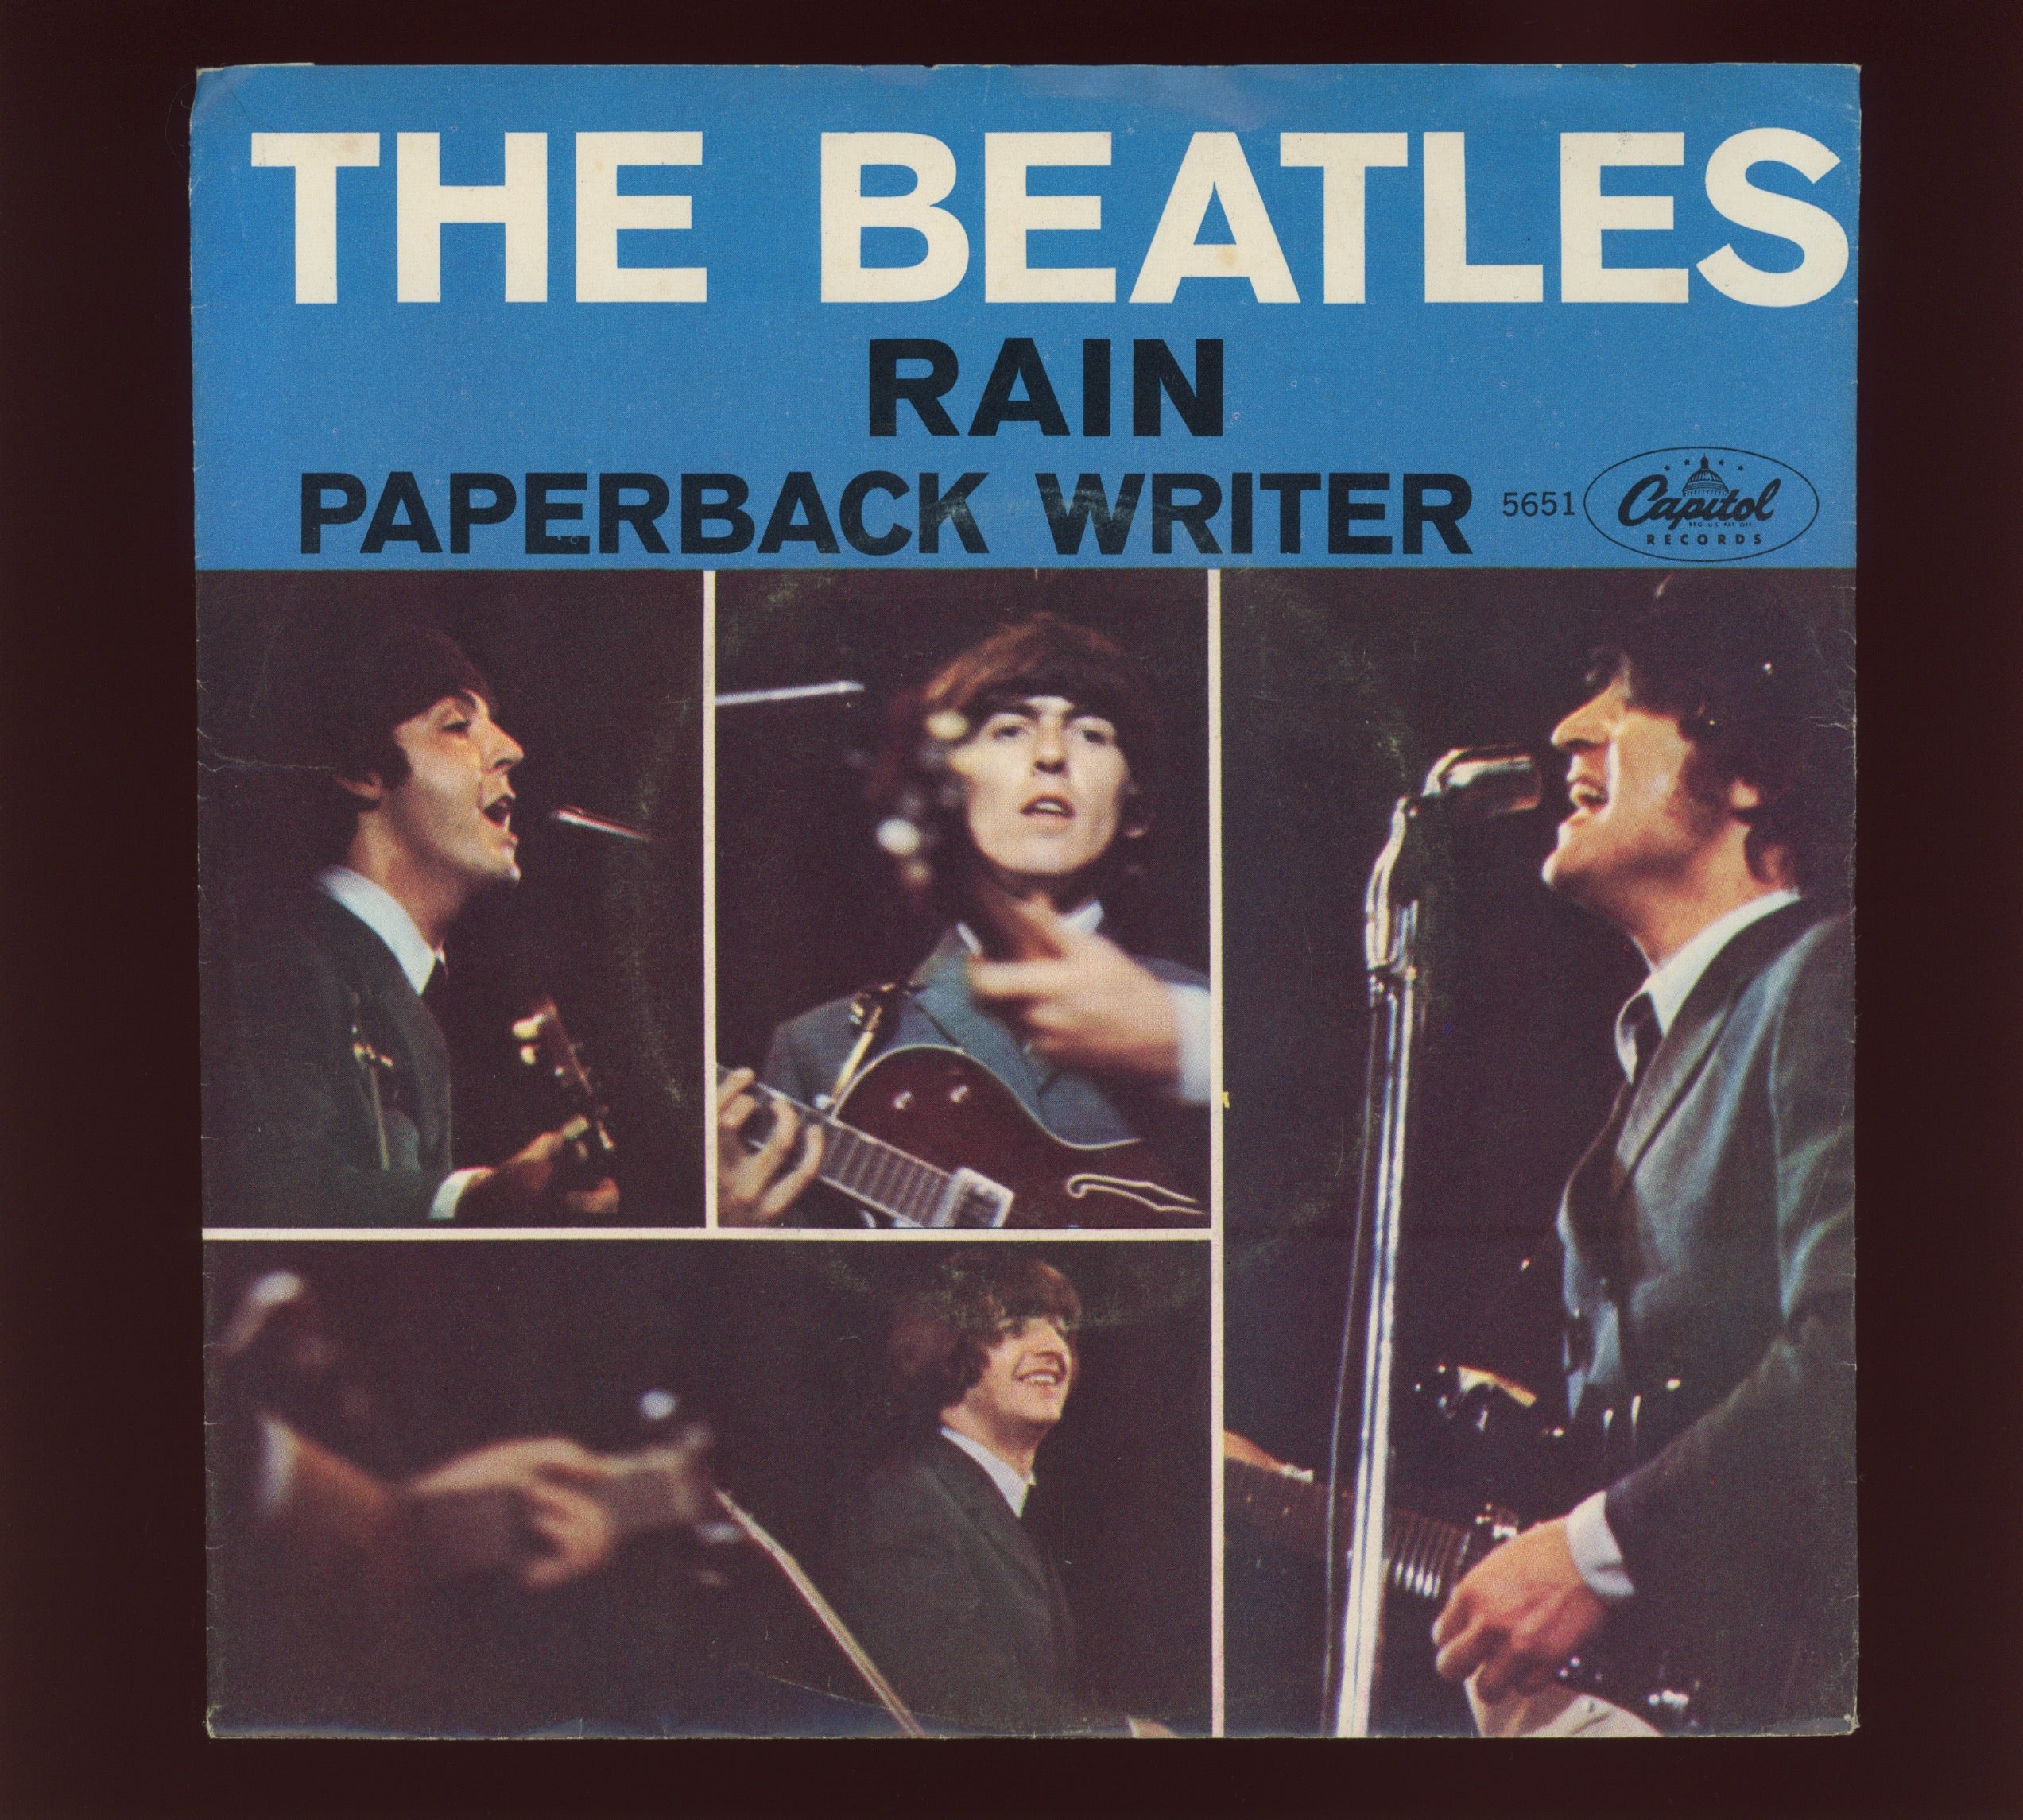 The Beatles - Paperback Writer / Rain on Capitol